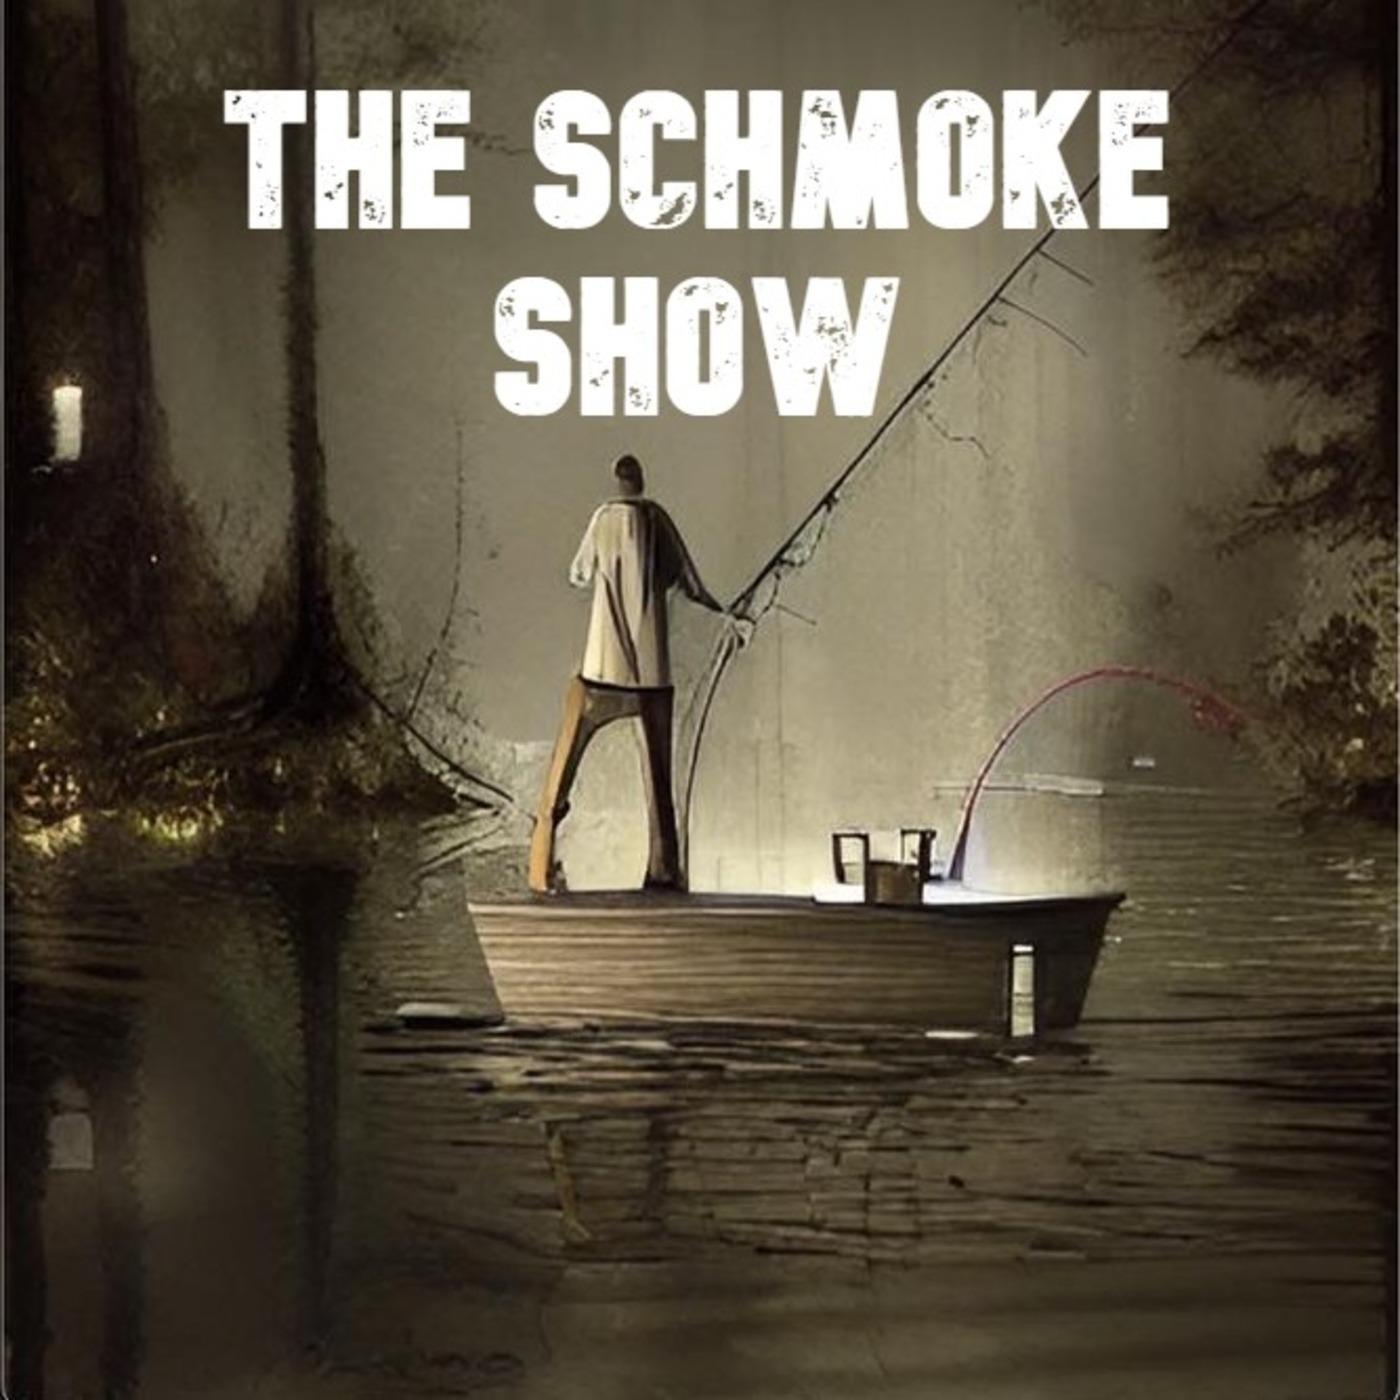 The Schmoke Show